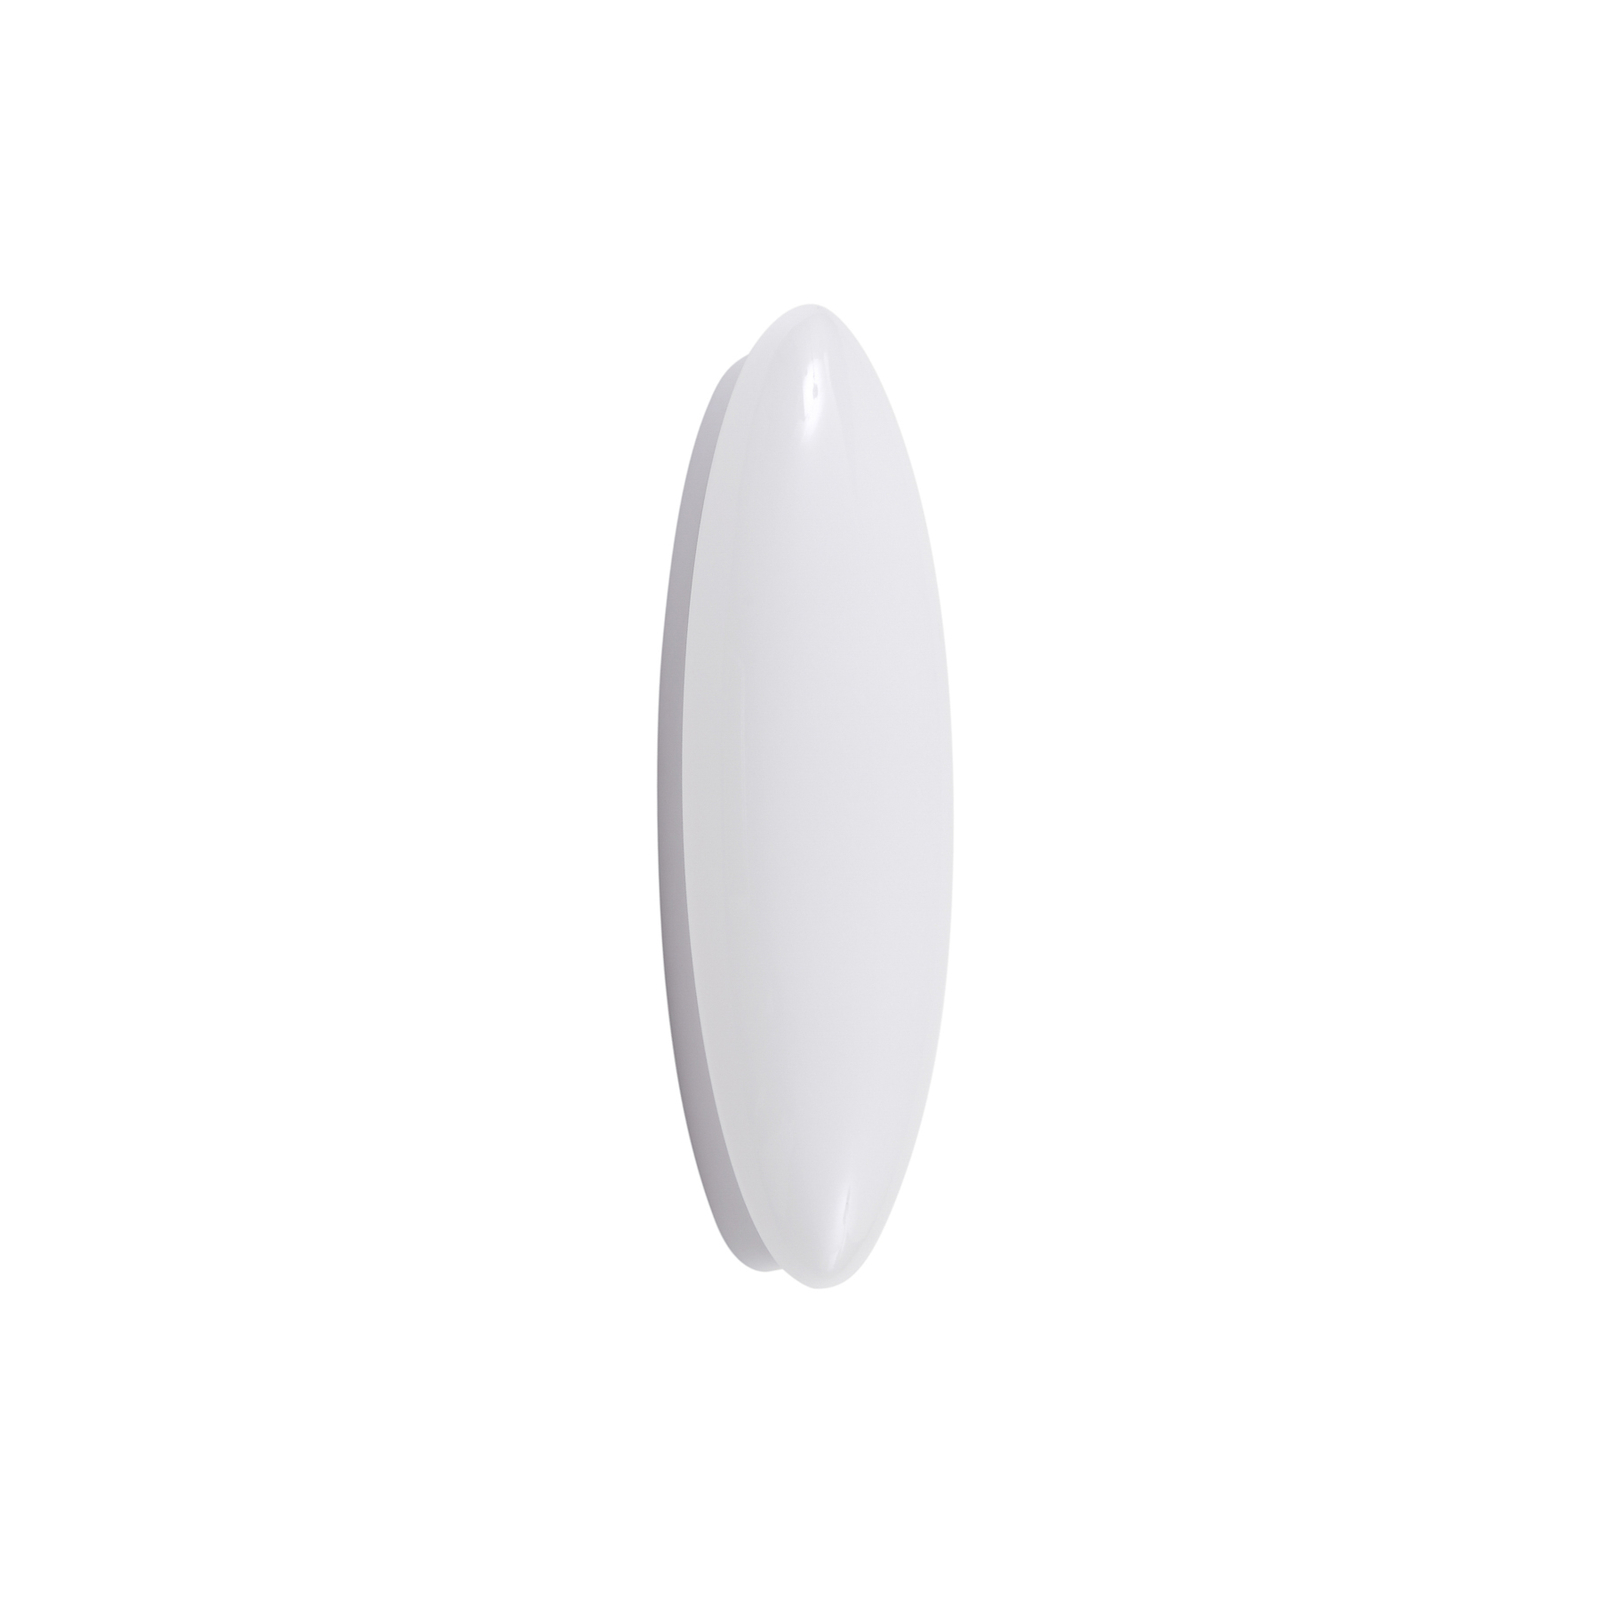 Lucande Leihlo LED wall light, oval, white